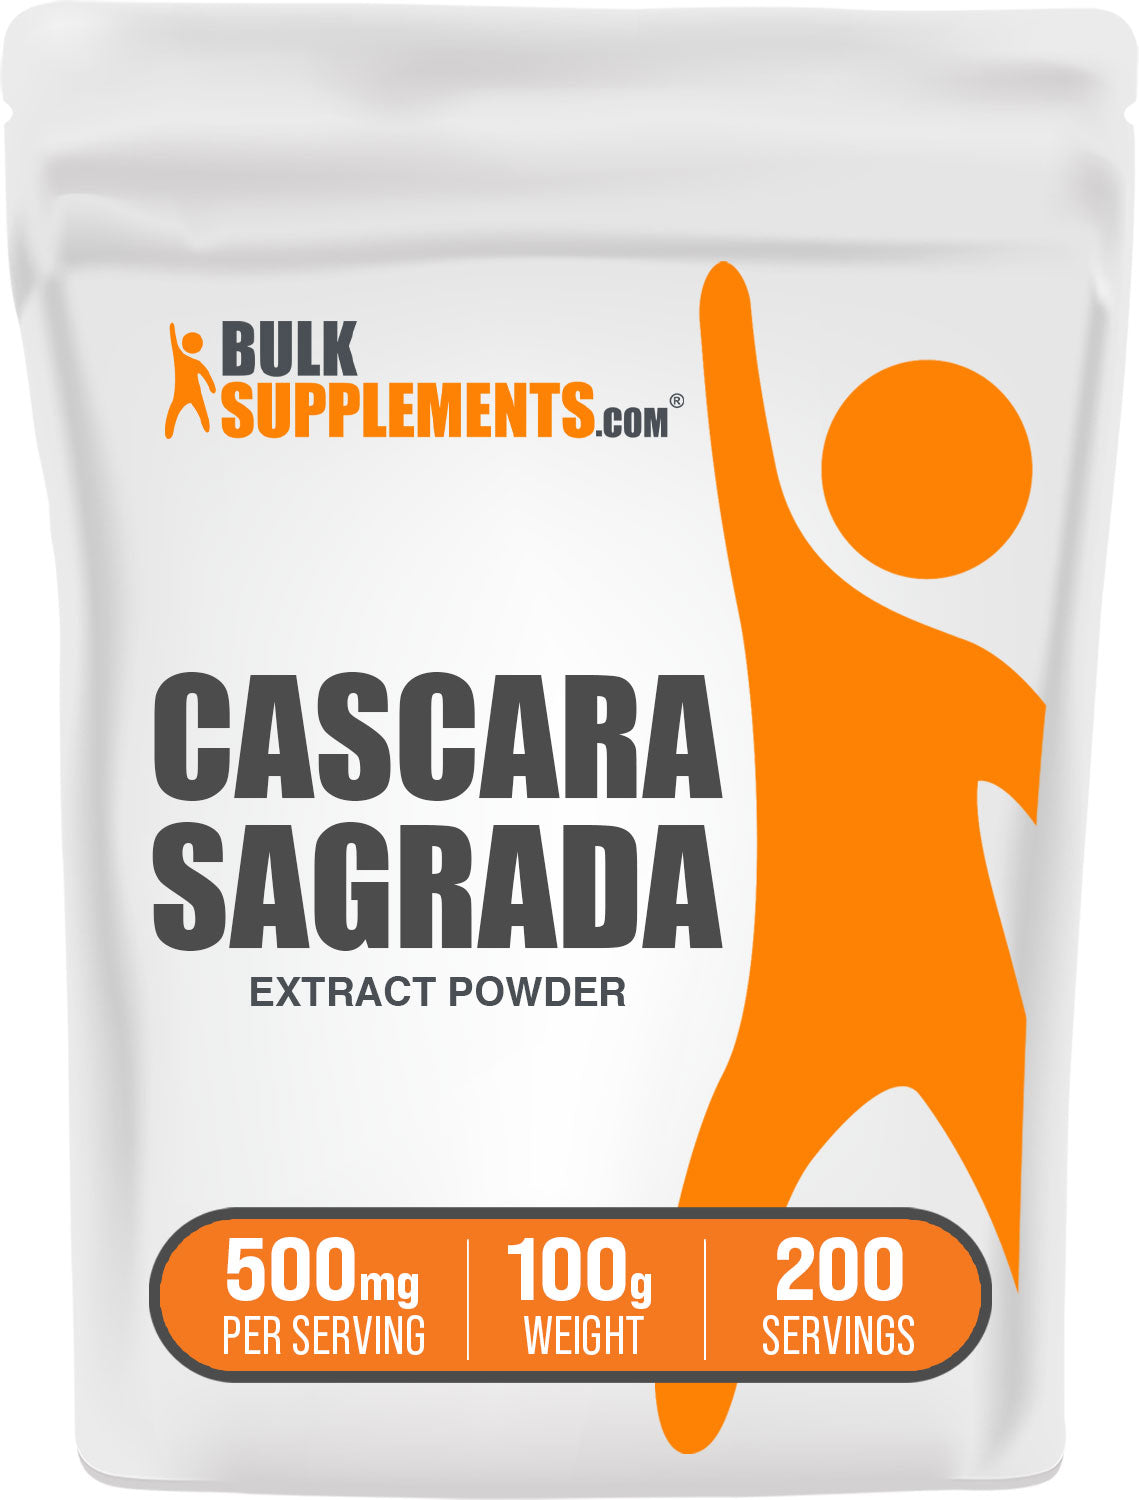 100g of cascara sagrada